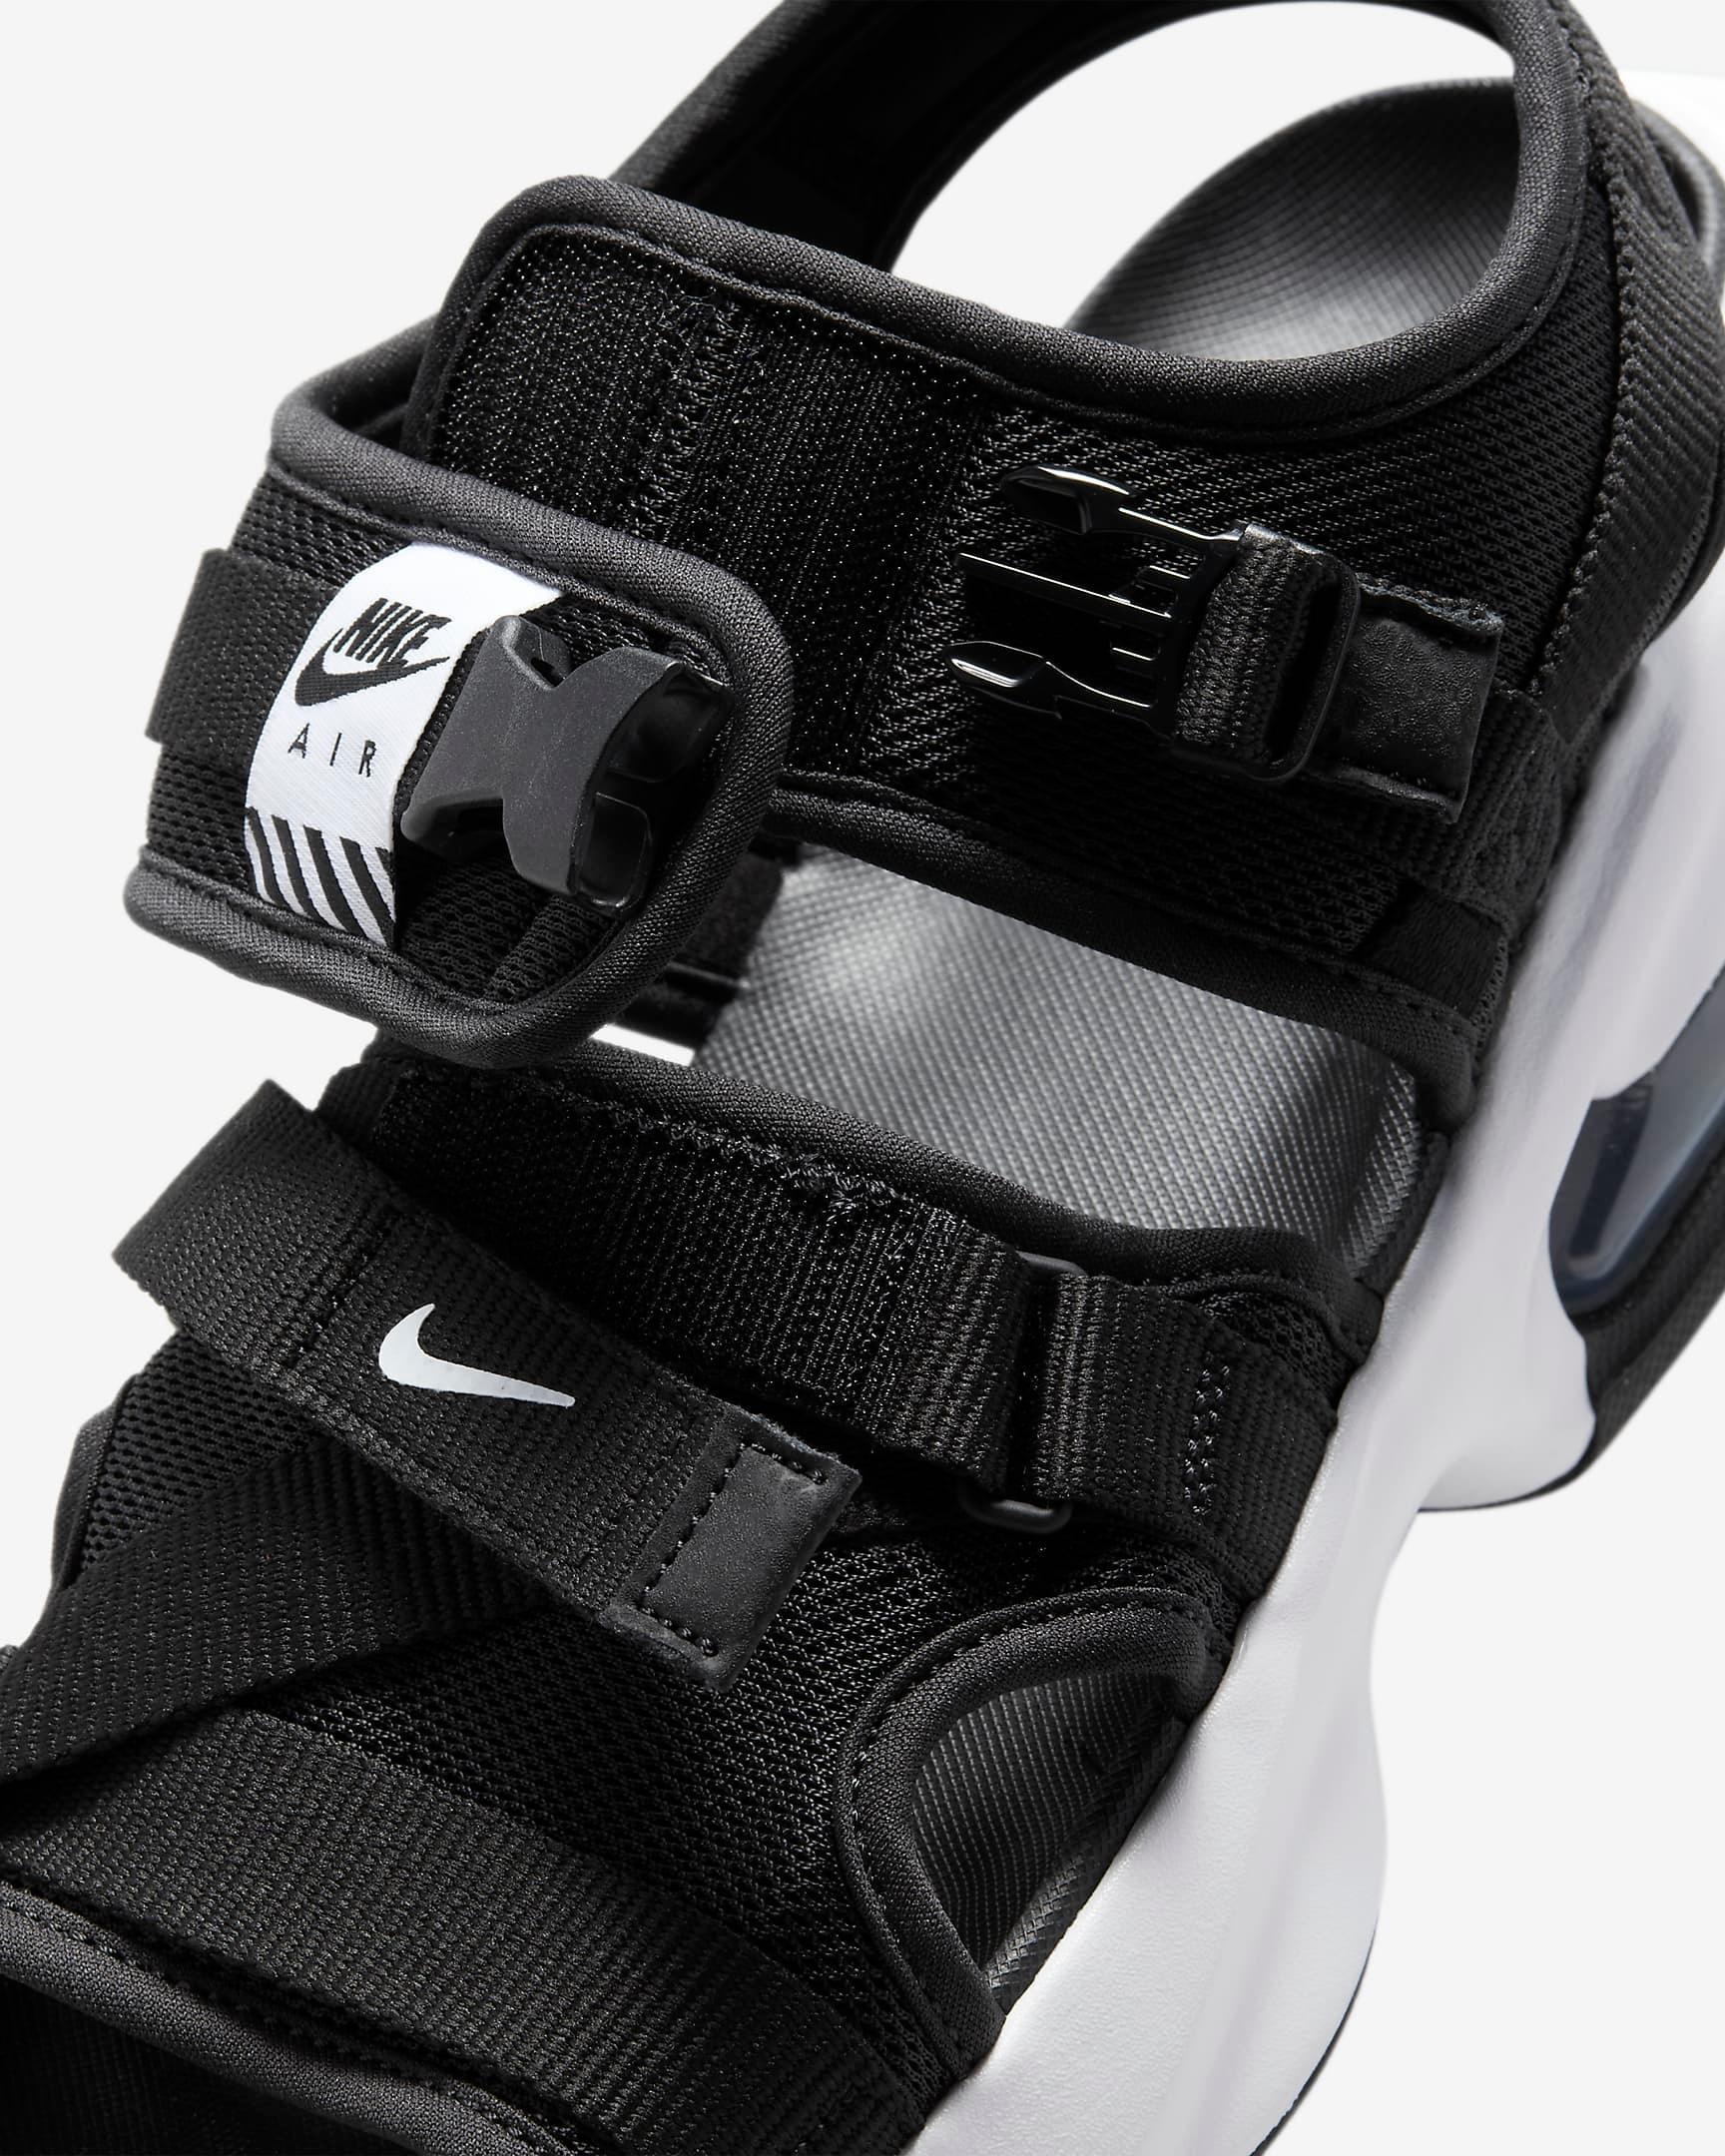 Giày Nike Air Max Sol Men Sandals #Black White - Kallos Vietnam